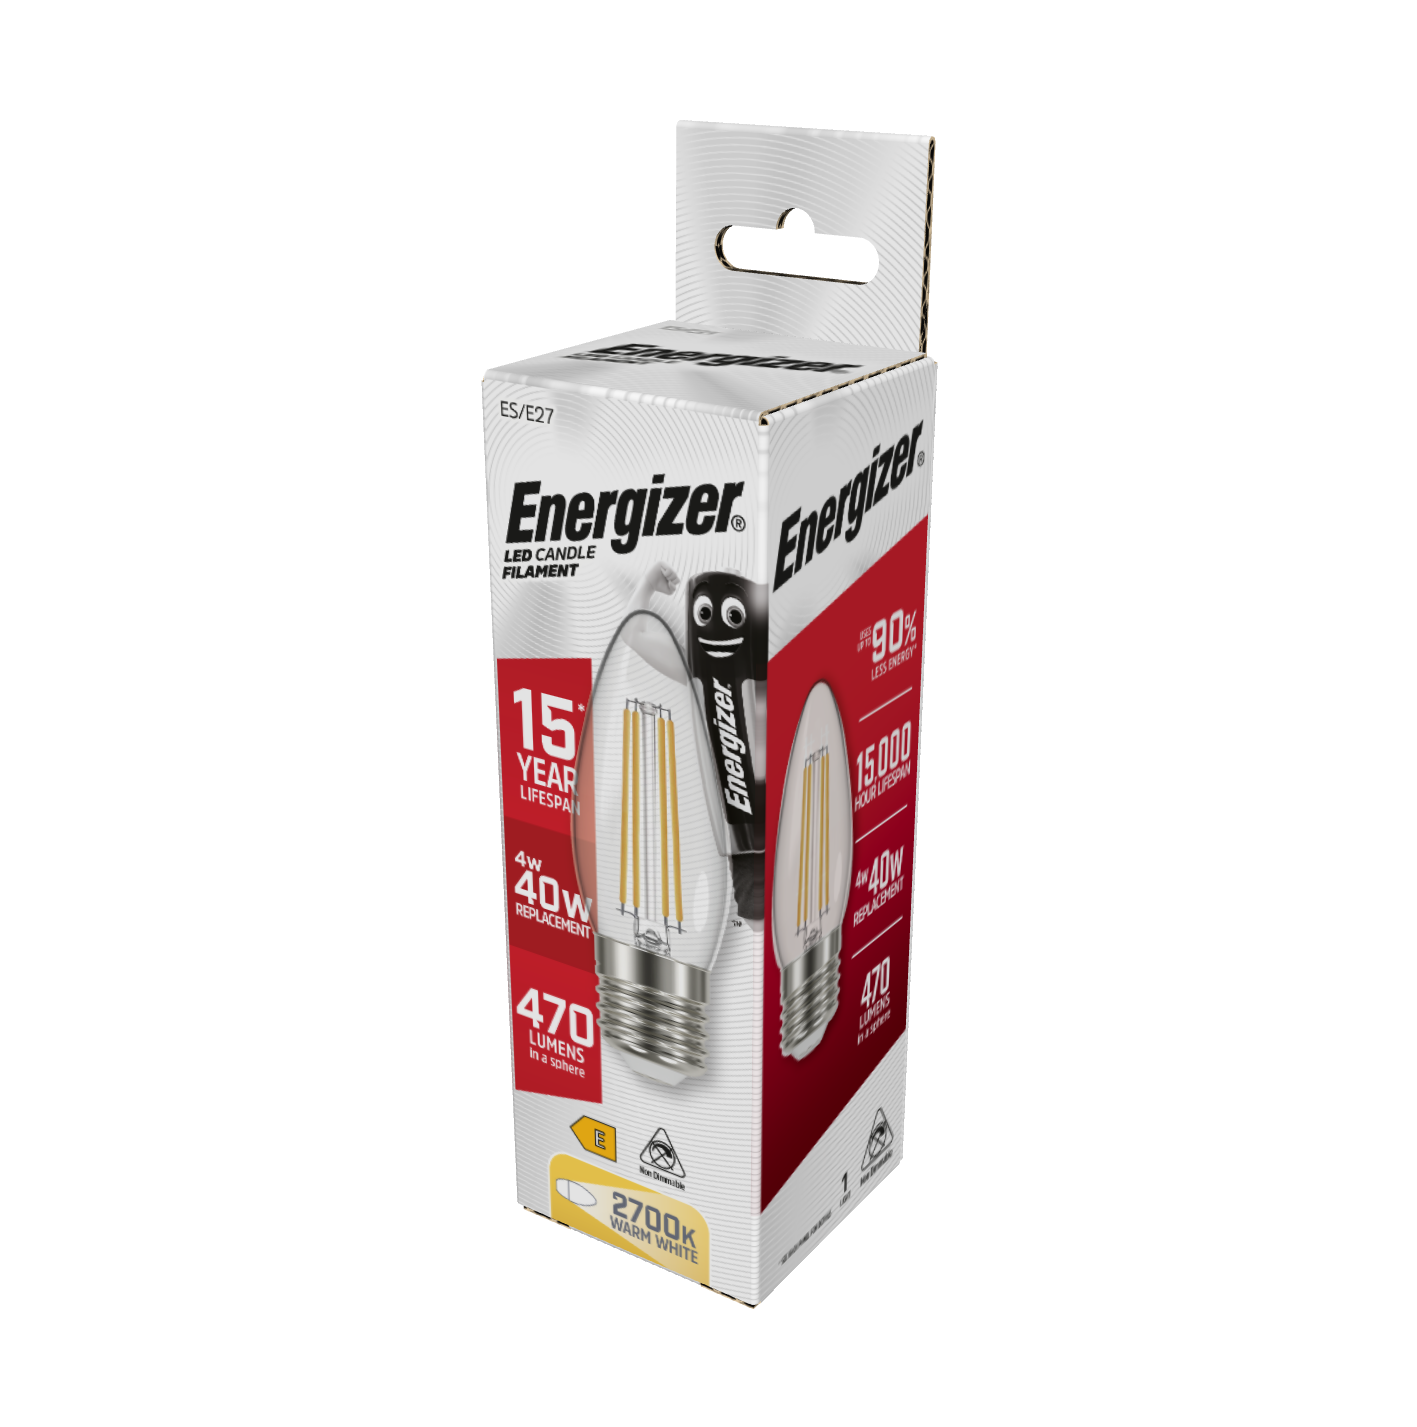 Energizer LED Filament Candle E27 (ES) 470lm 4W 2,700K (Warm White), Box of 1